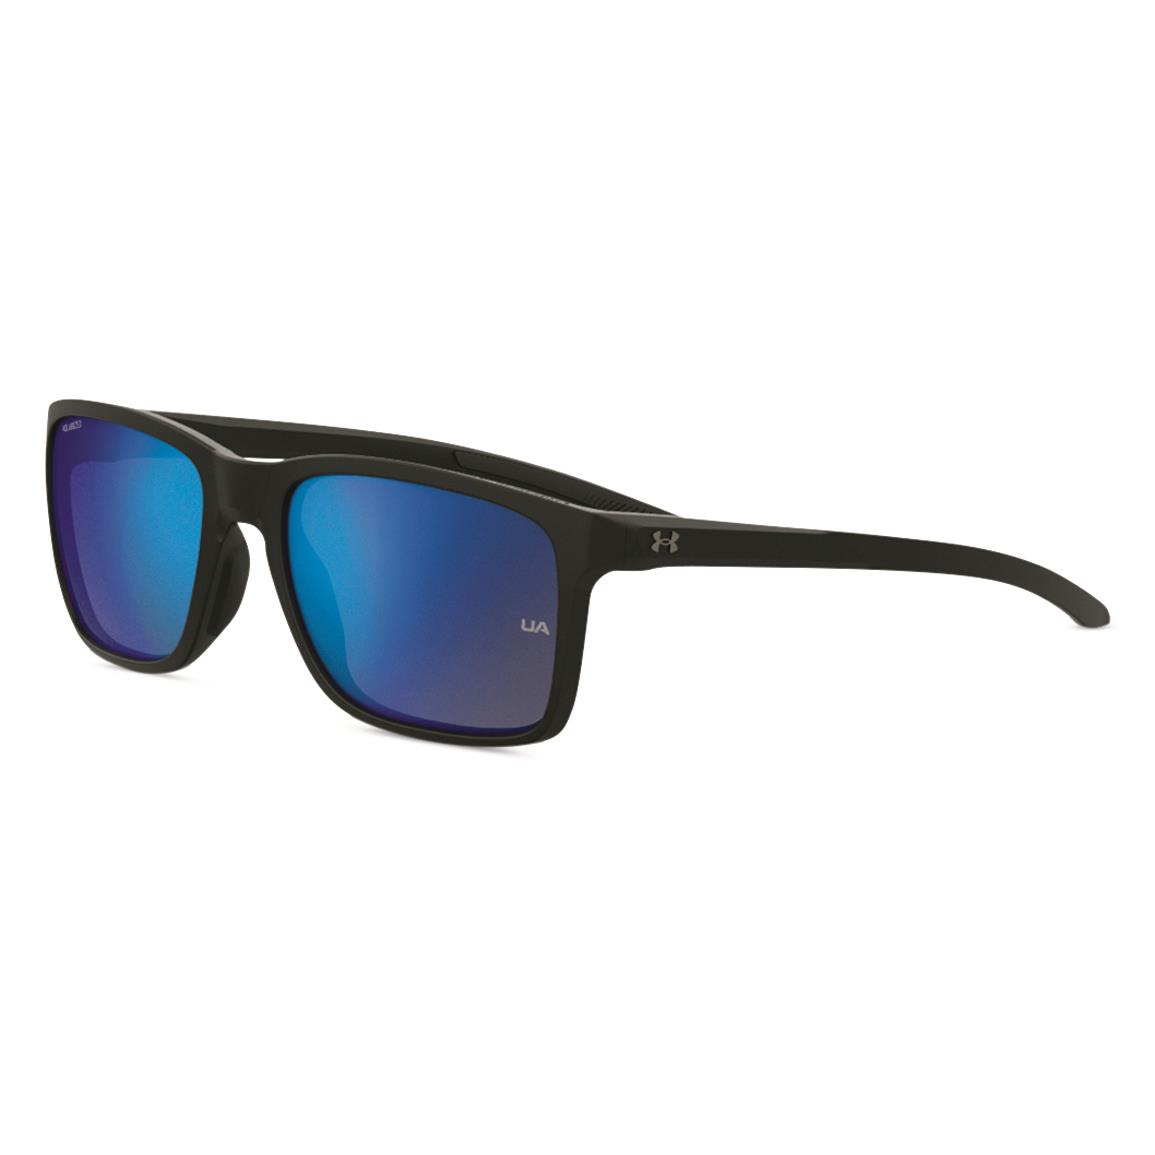 Under Armour Hustle Mirror Sunglasses, Matte Black/blue Mirror